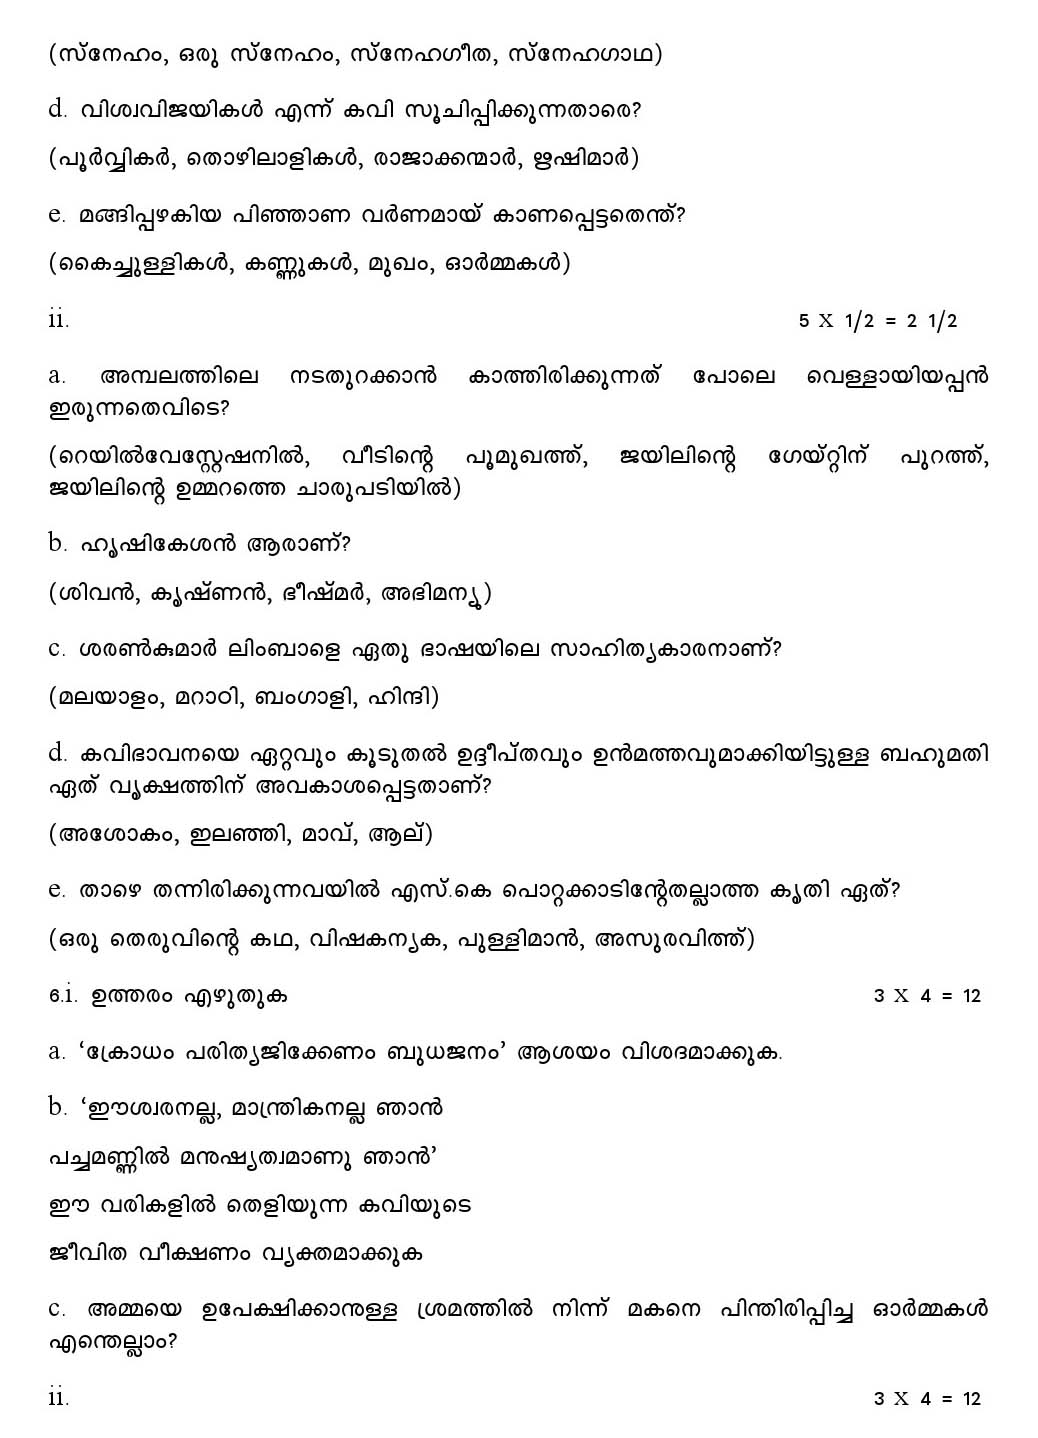 Malayalam CBSE Class X Sample Question Paper 2018-19 - Image 4